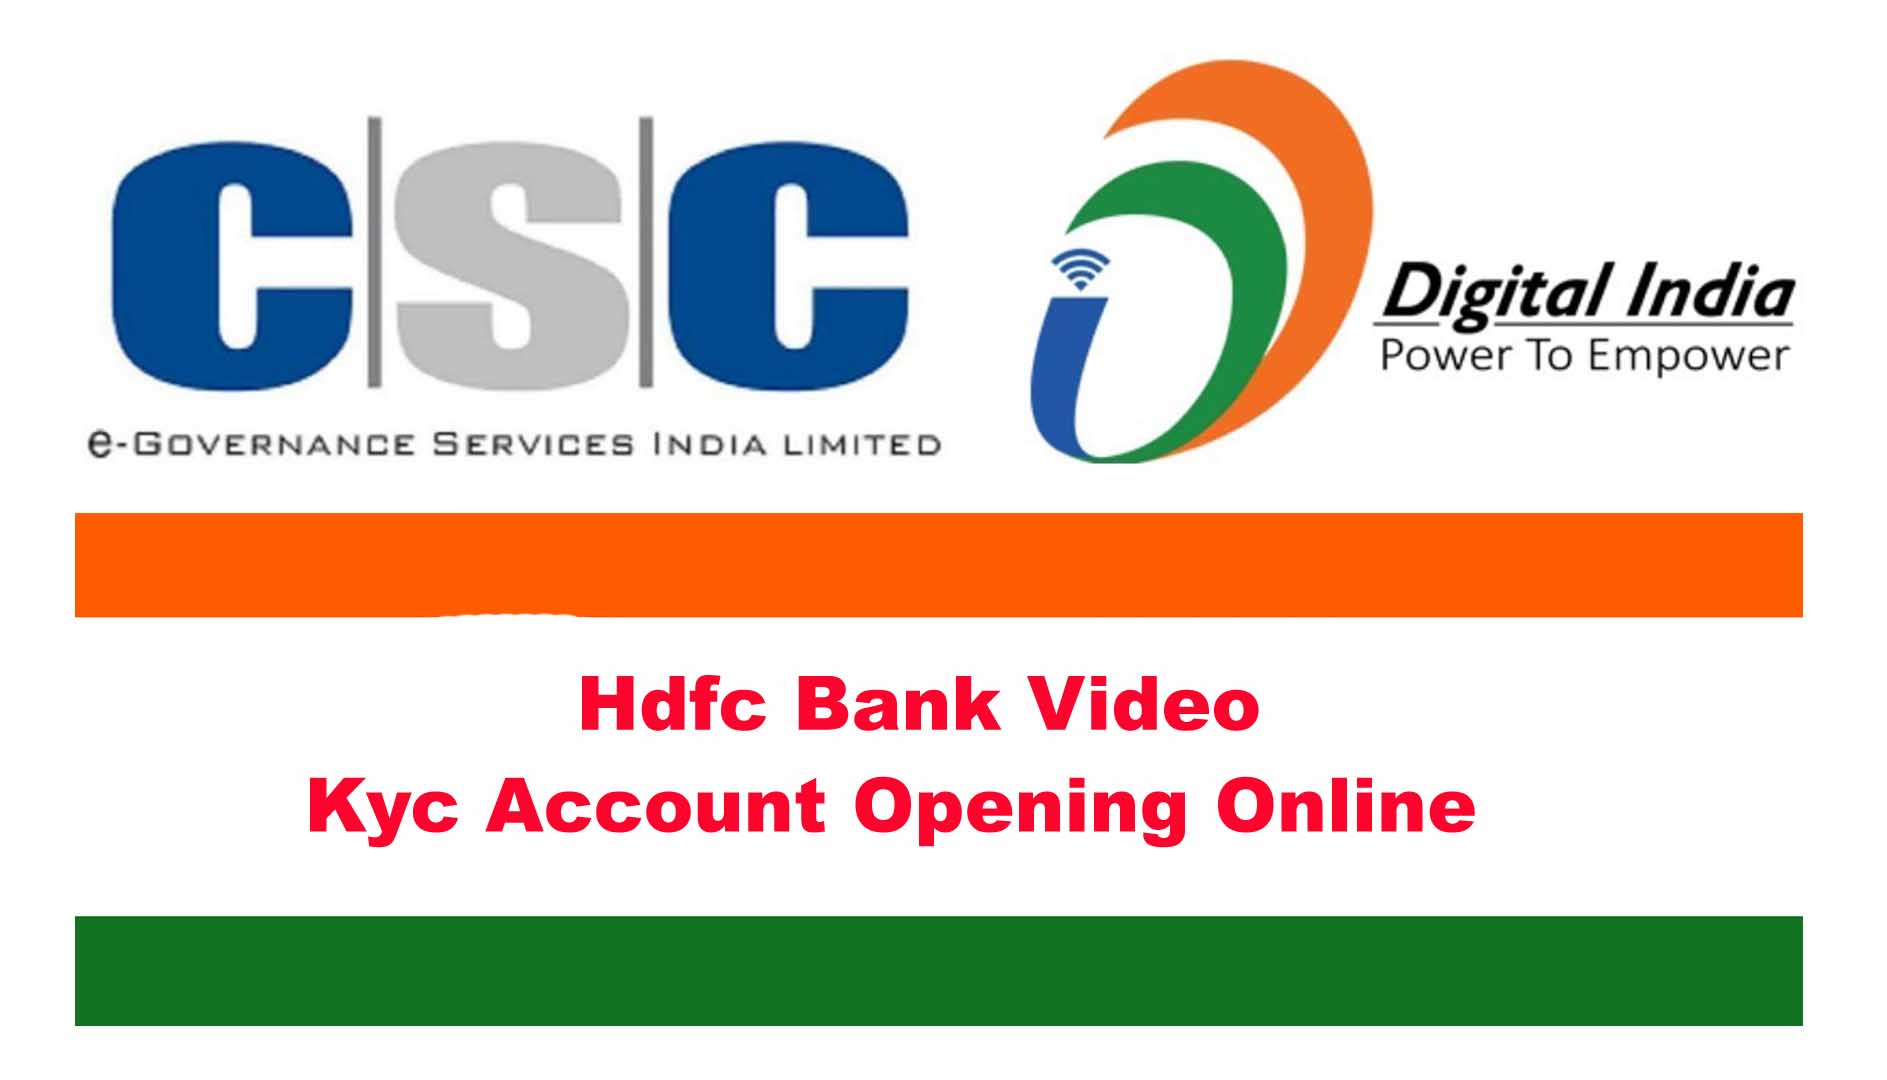 Hdfc Bank Video Kyc Account Opening Online Through Csc Digi Seva Portal 1538